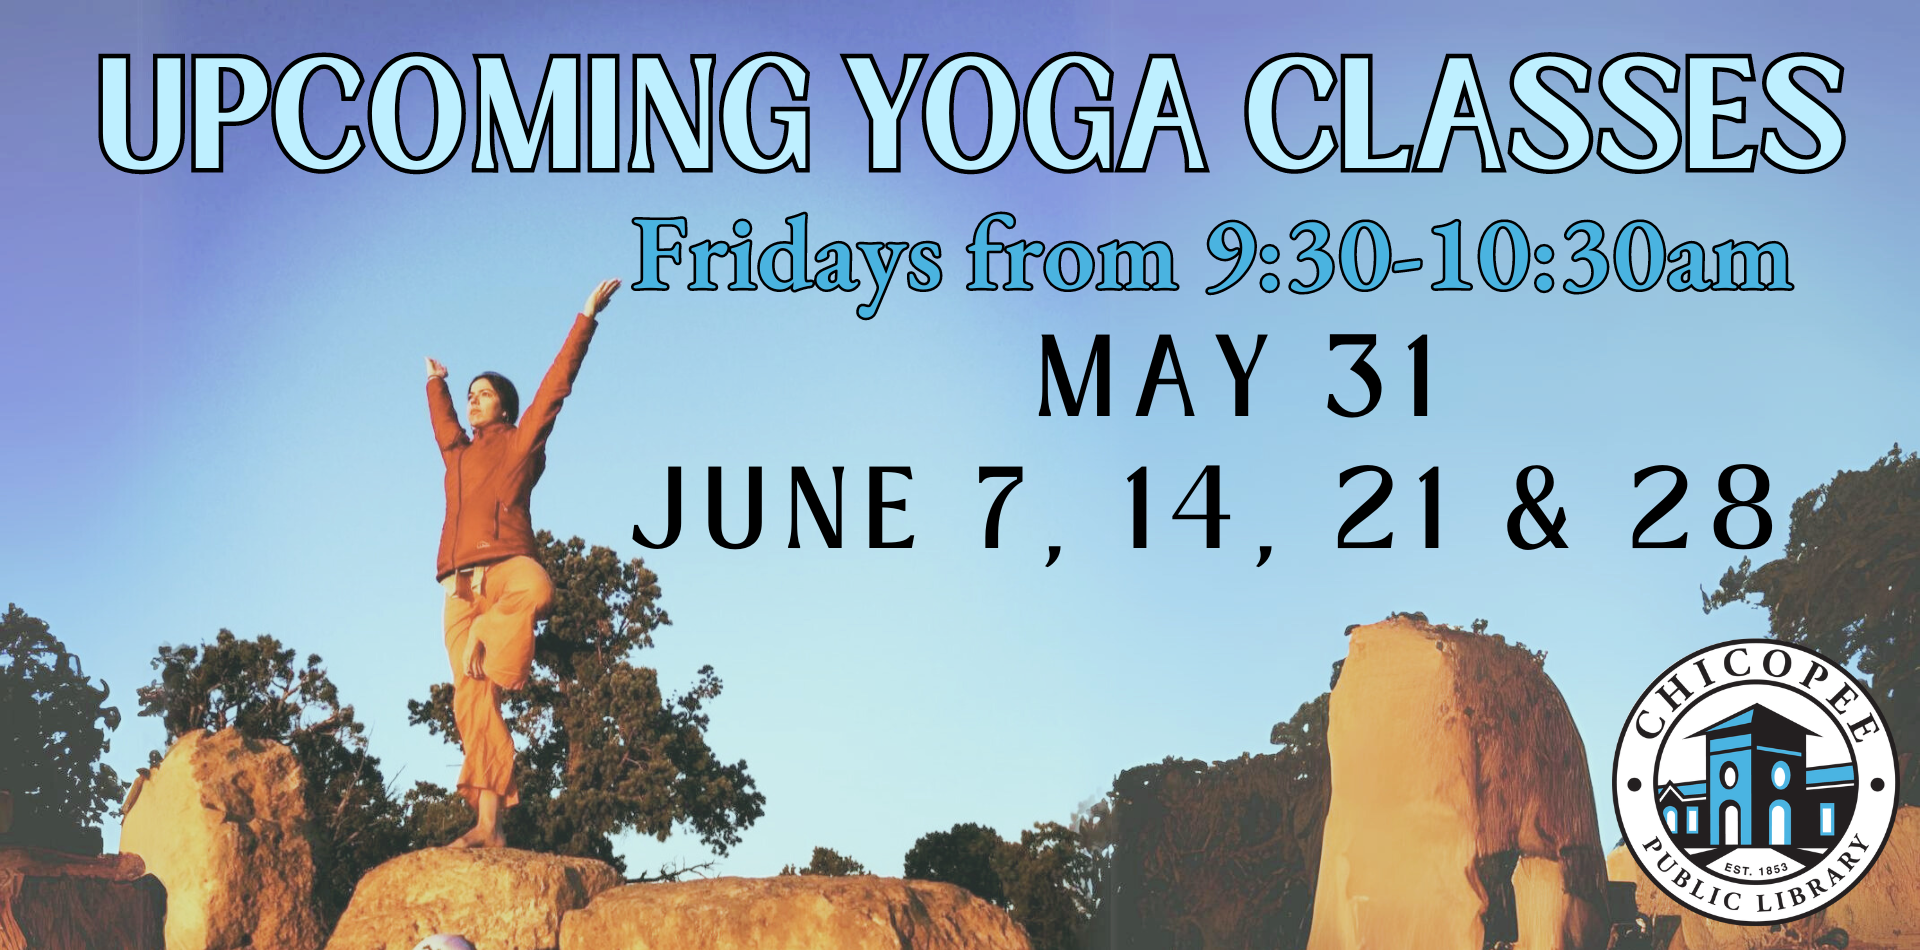 upcoming yoga classes fridays from 9:30-10:30am May 31 June 7, 14, 21 & 26